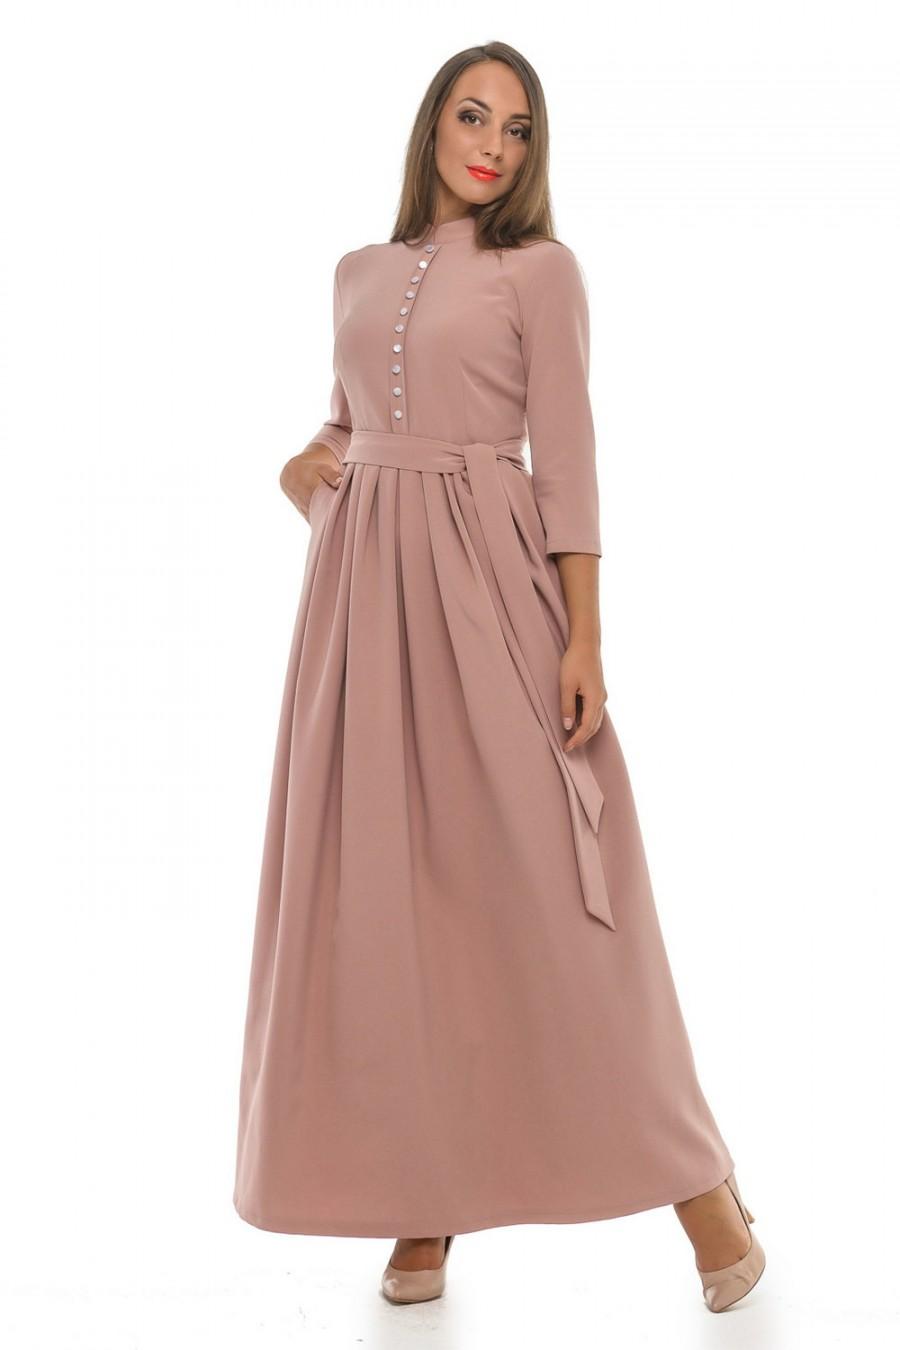 Свадьба - Very soft Beige dress, Long dress with pleats, Formal Maxi dress, Mother of the bride dress, long sleeve maxi dress.